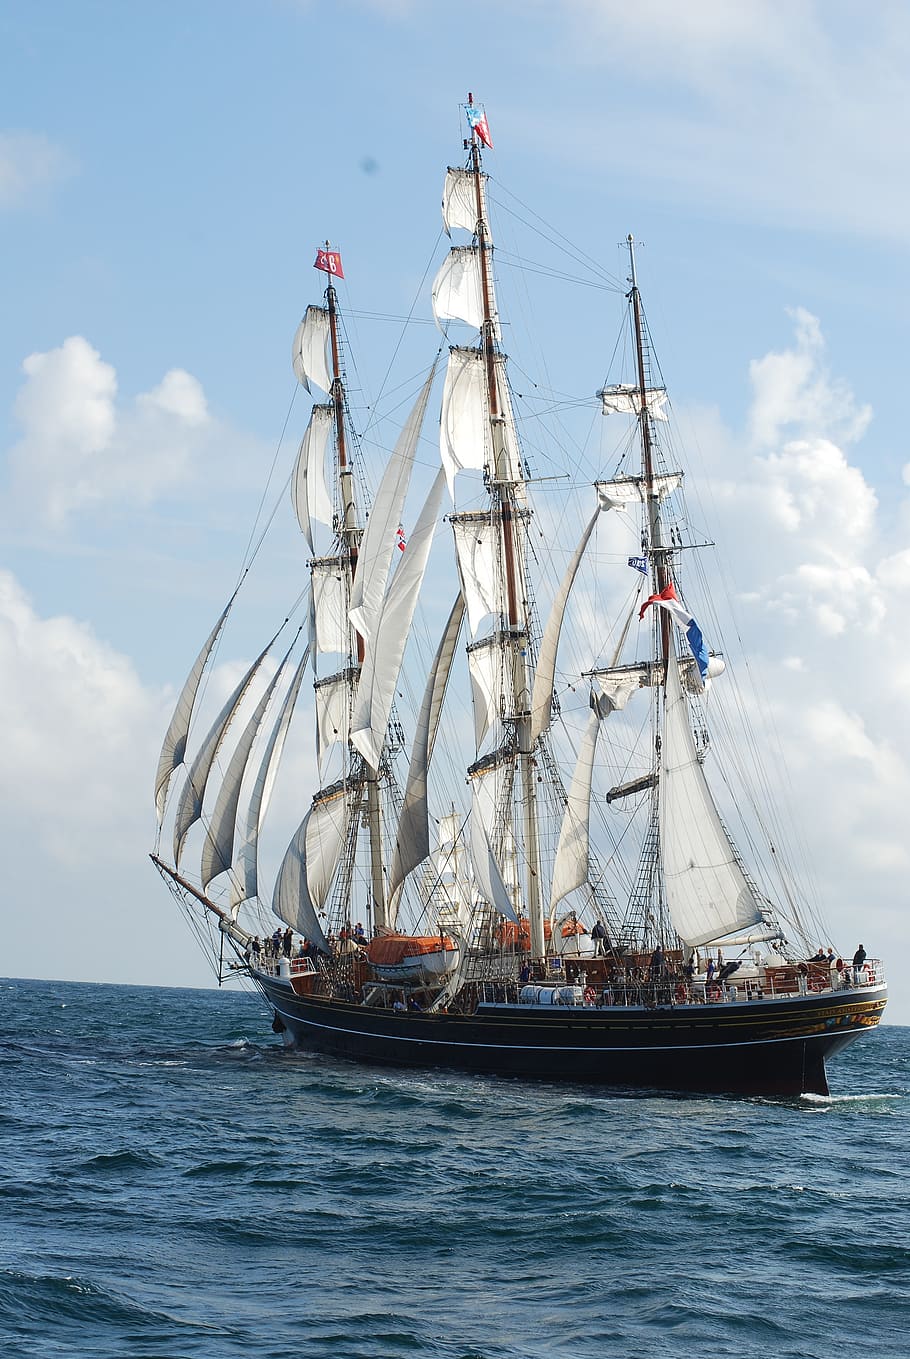 white and black galleon, clipper ship, tall, masts, sailing, nautical